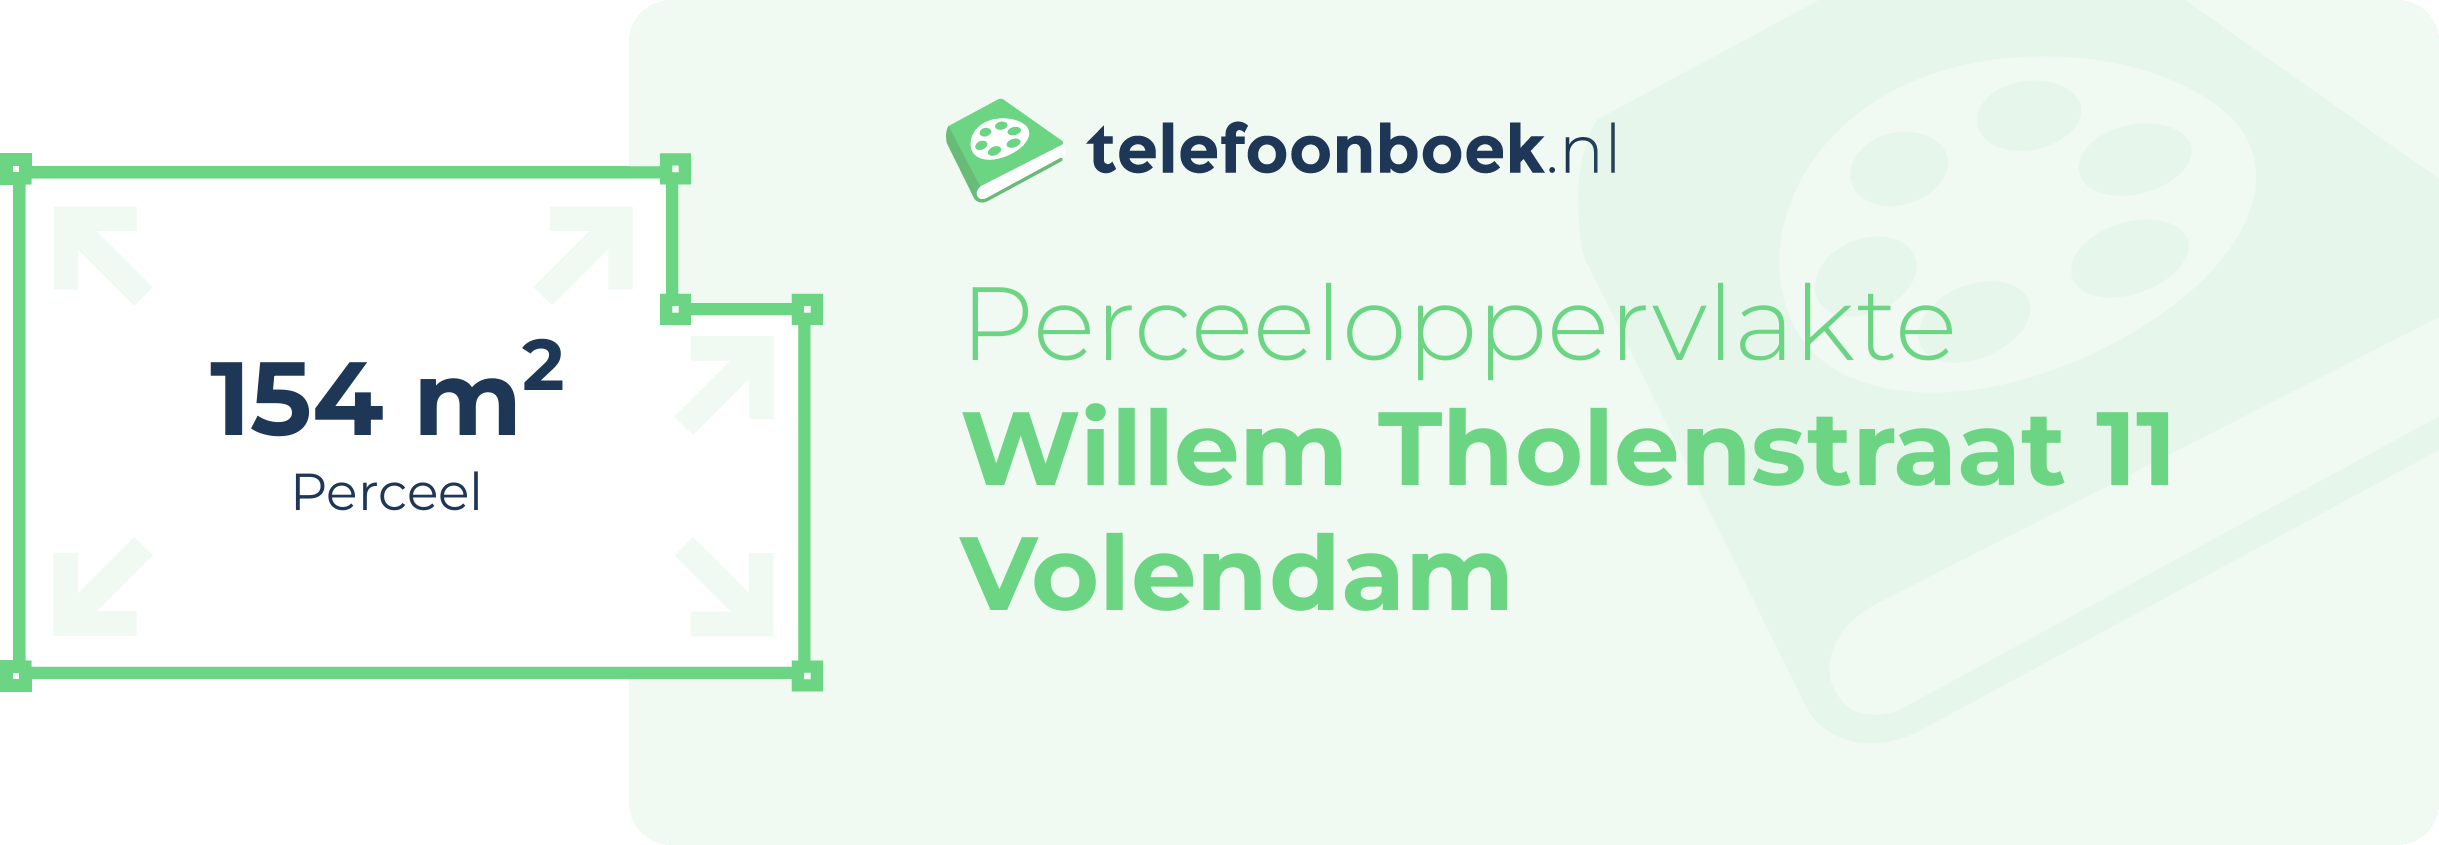 Perceeloppervlakte Willem Tholenstraat 11 Volendam